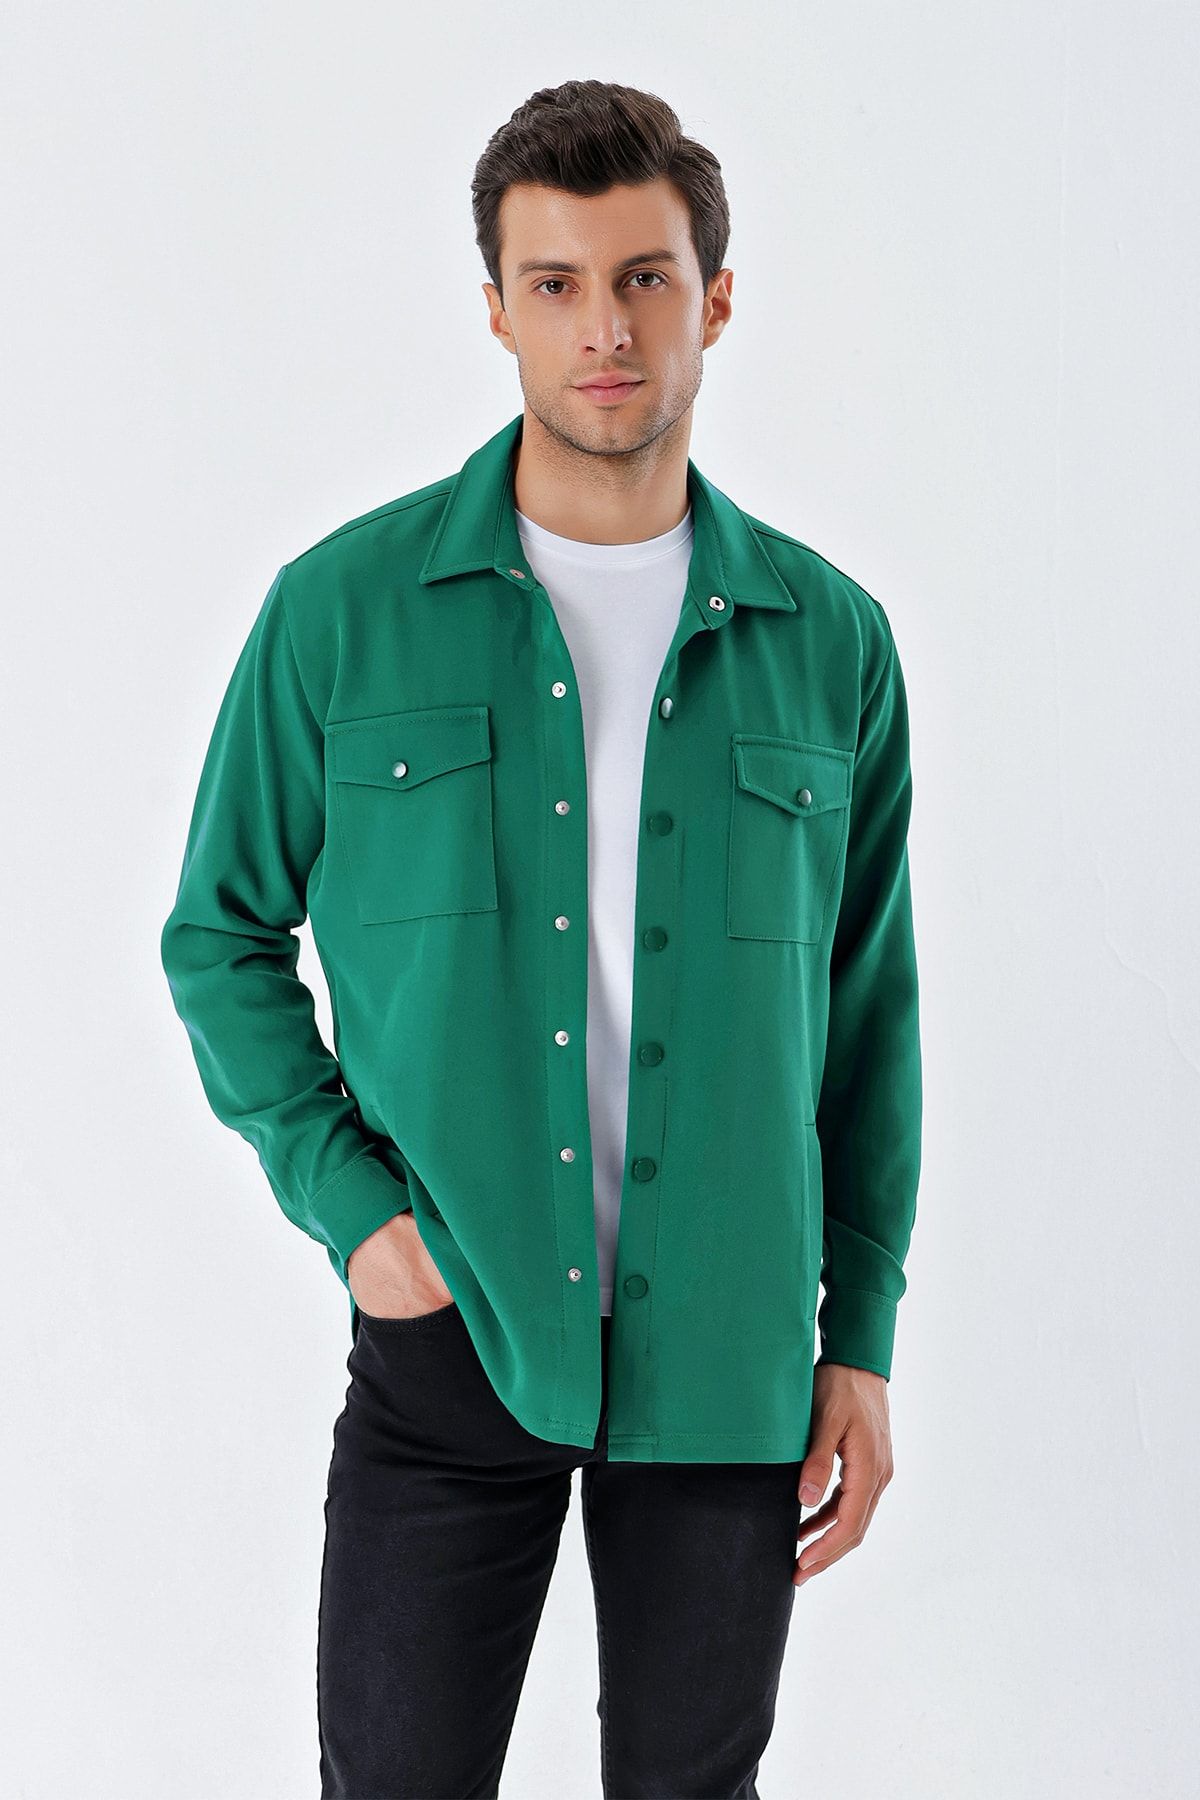 Bigdart پیراهن مردانه بزرگ 20193 - سبز زمردی